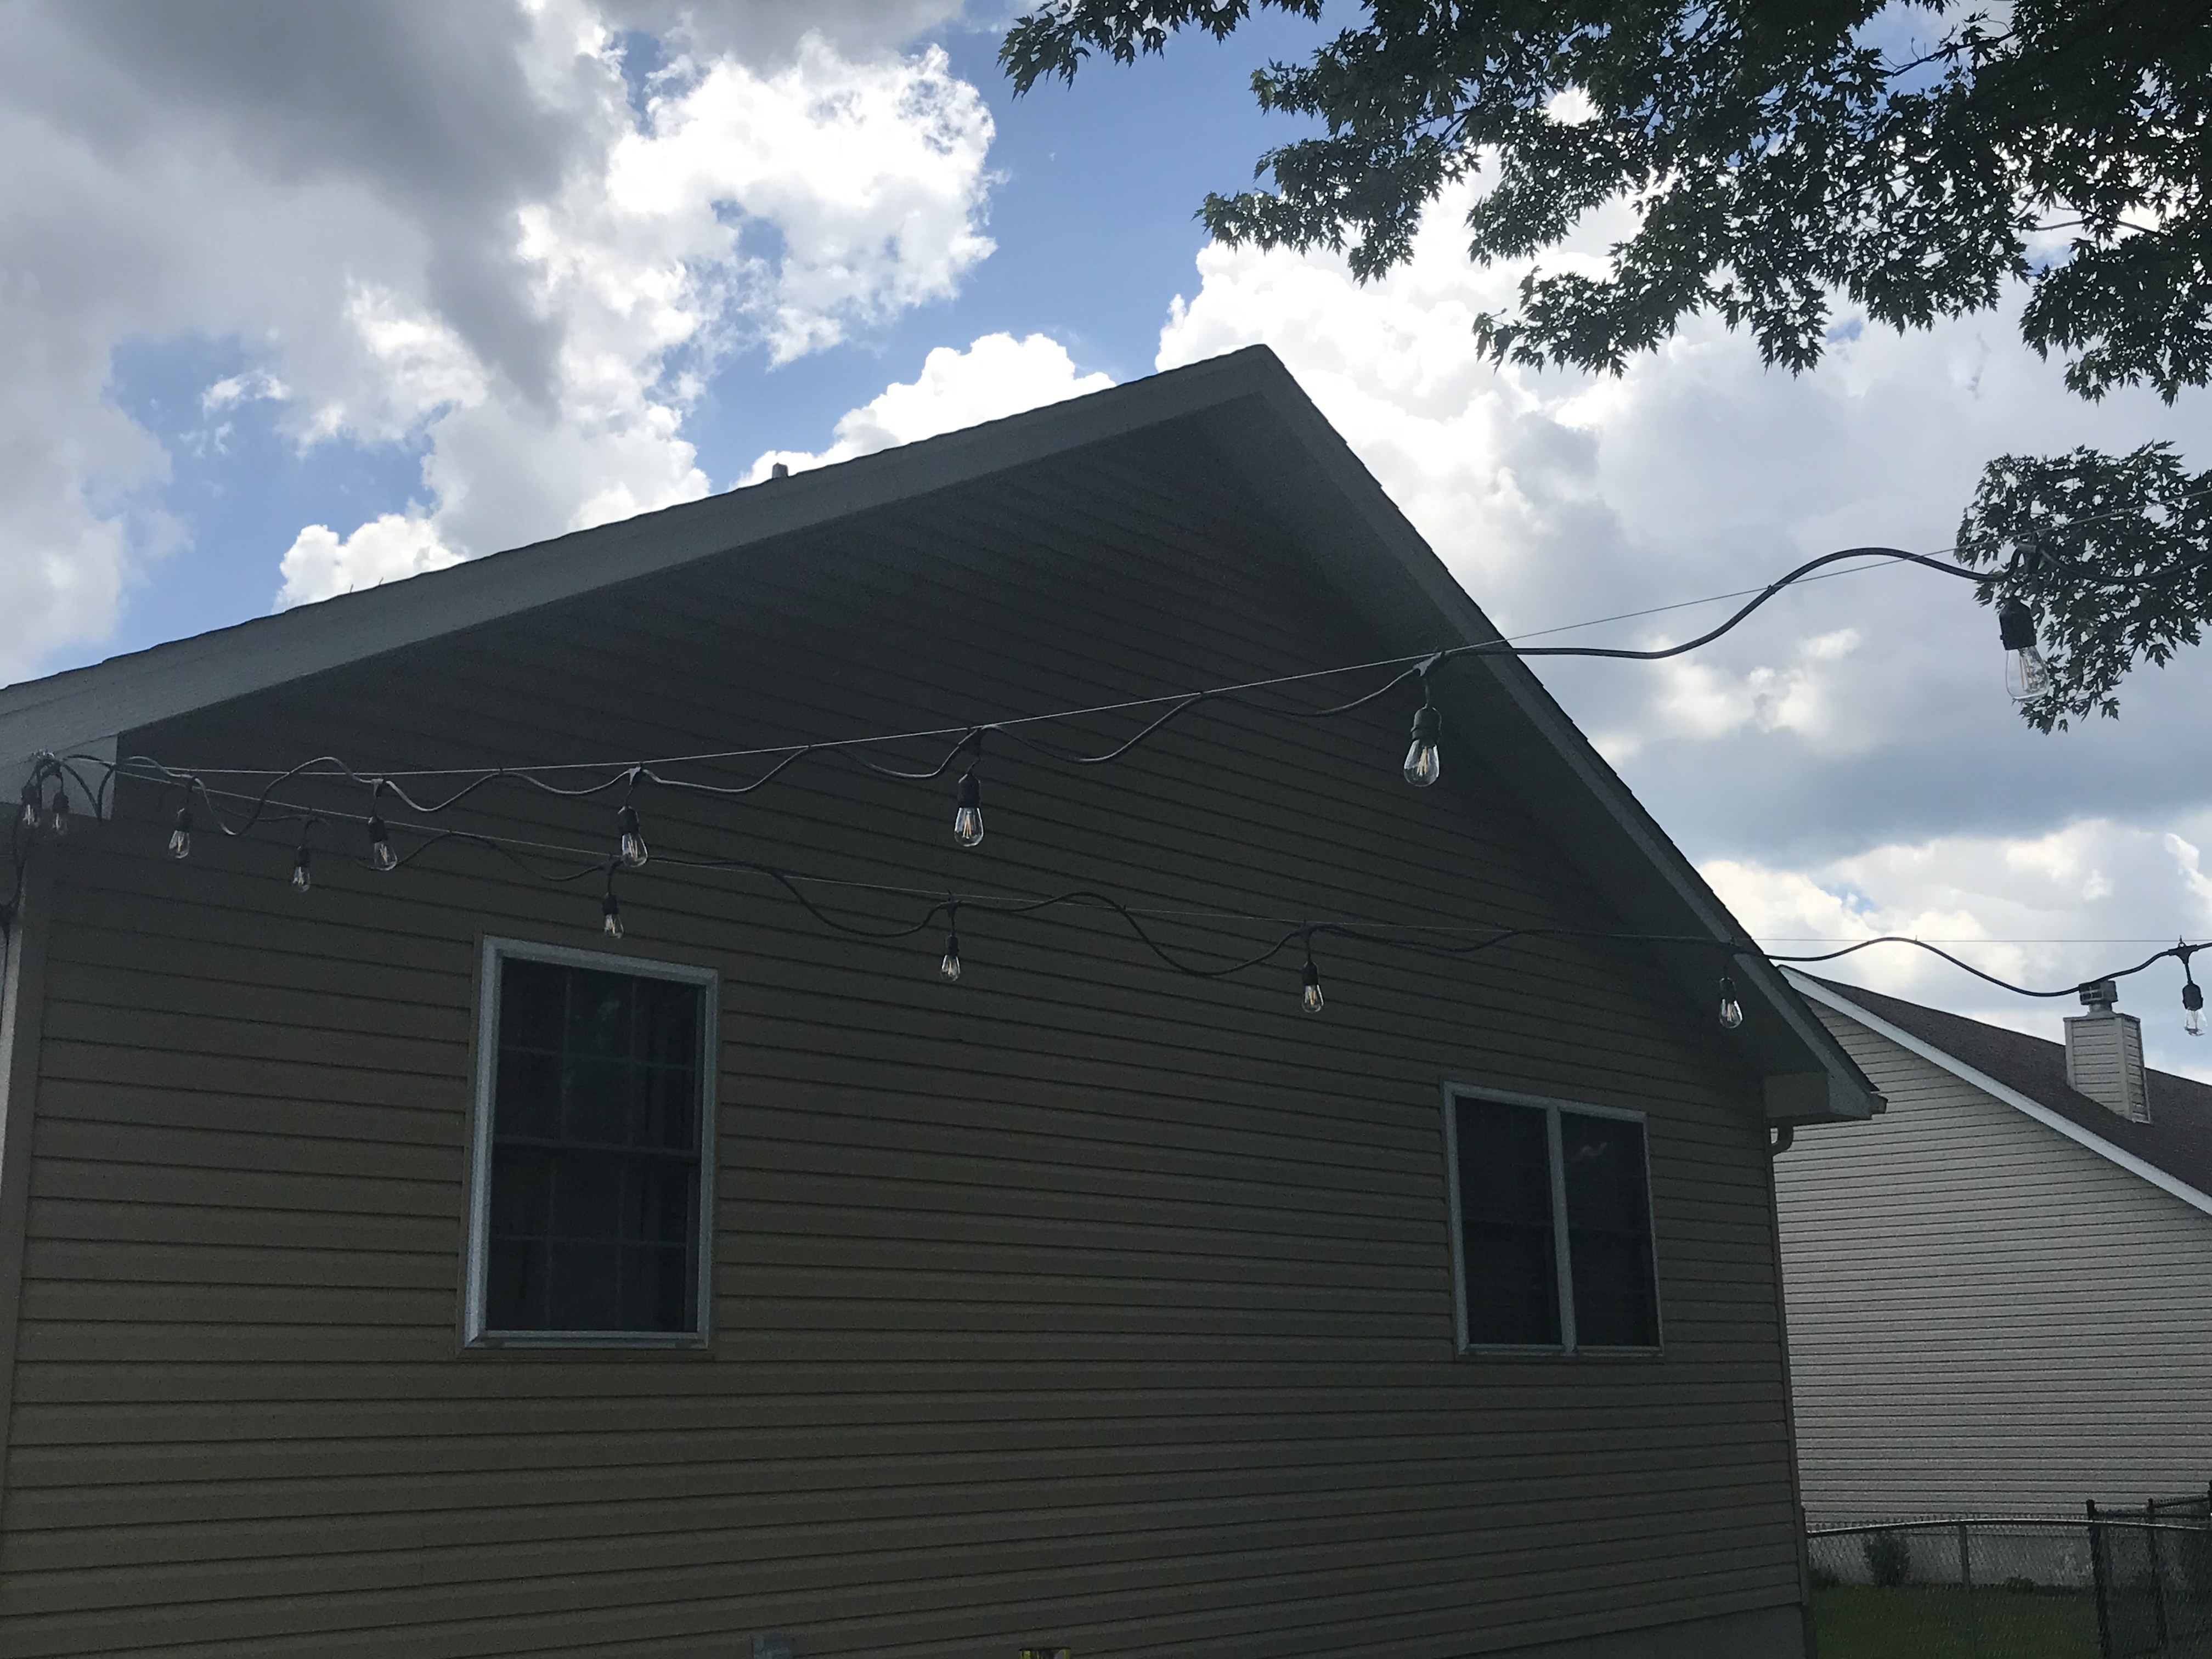 How to hang outdoor string lights. Easy backyard DIY ideas.